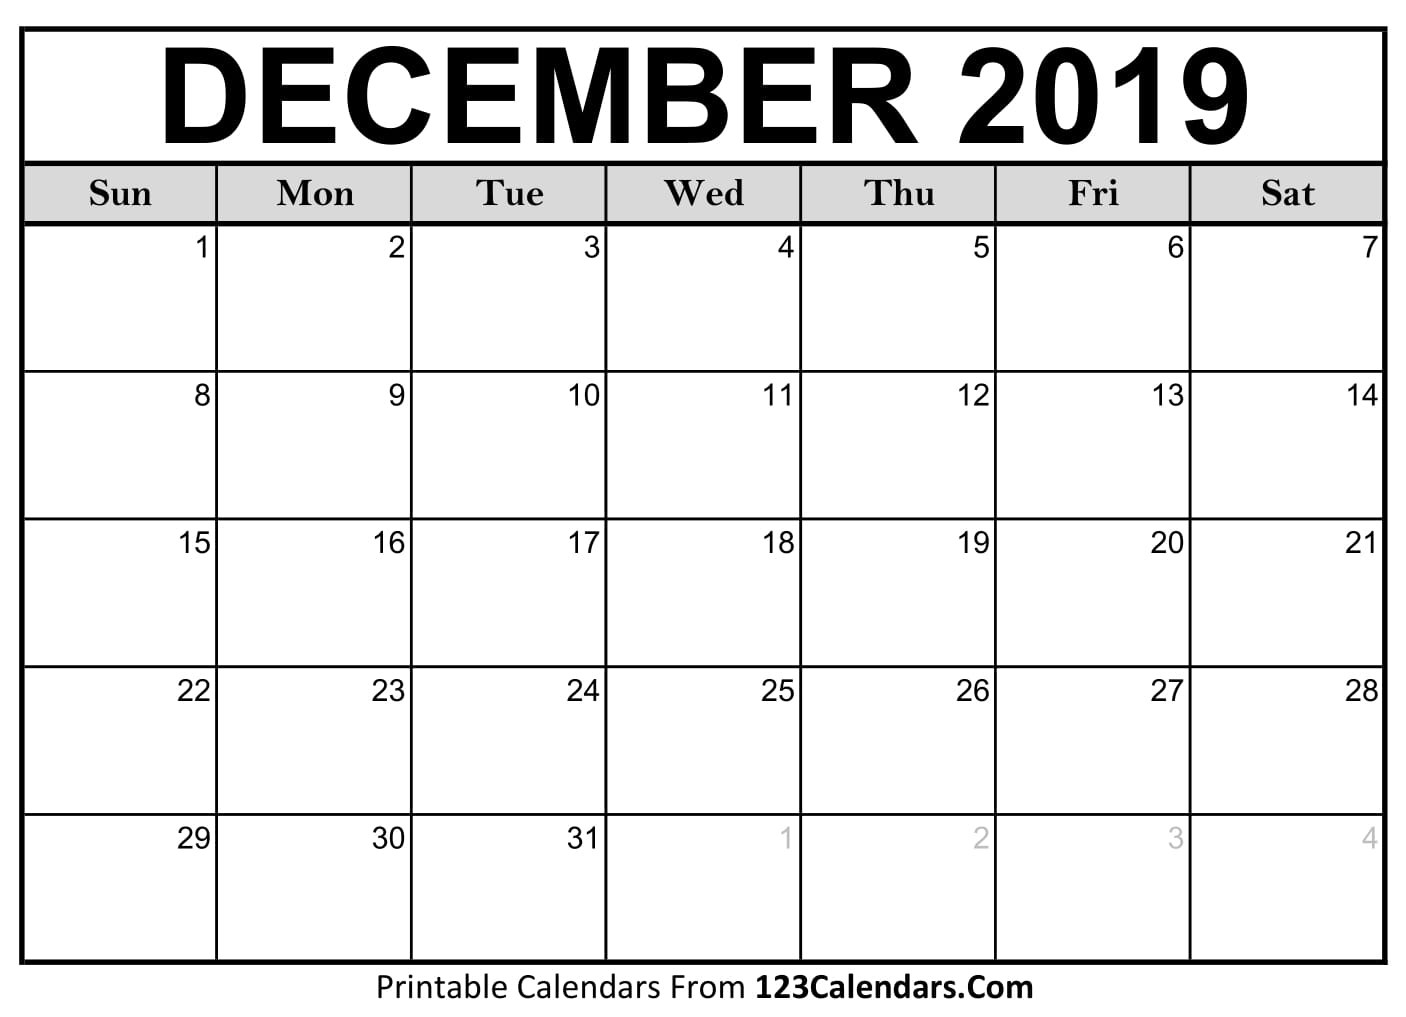 December 2019 Calendar Blank Easily Printable 123Calendars